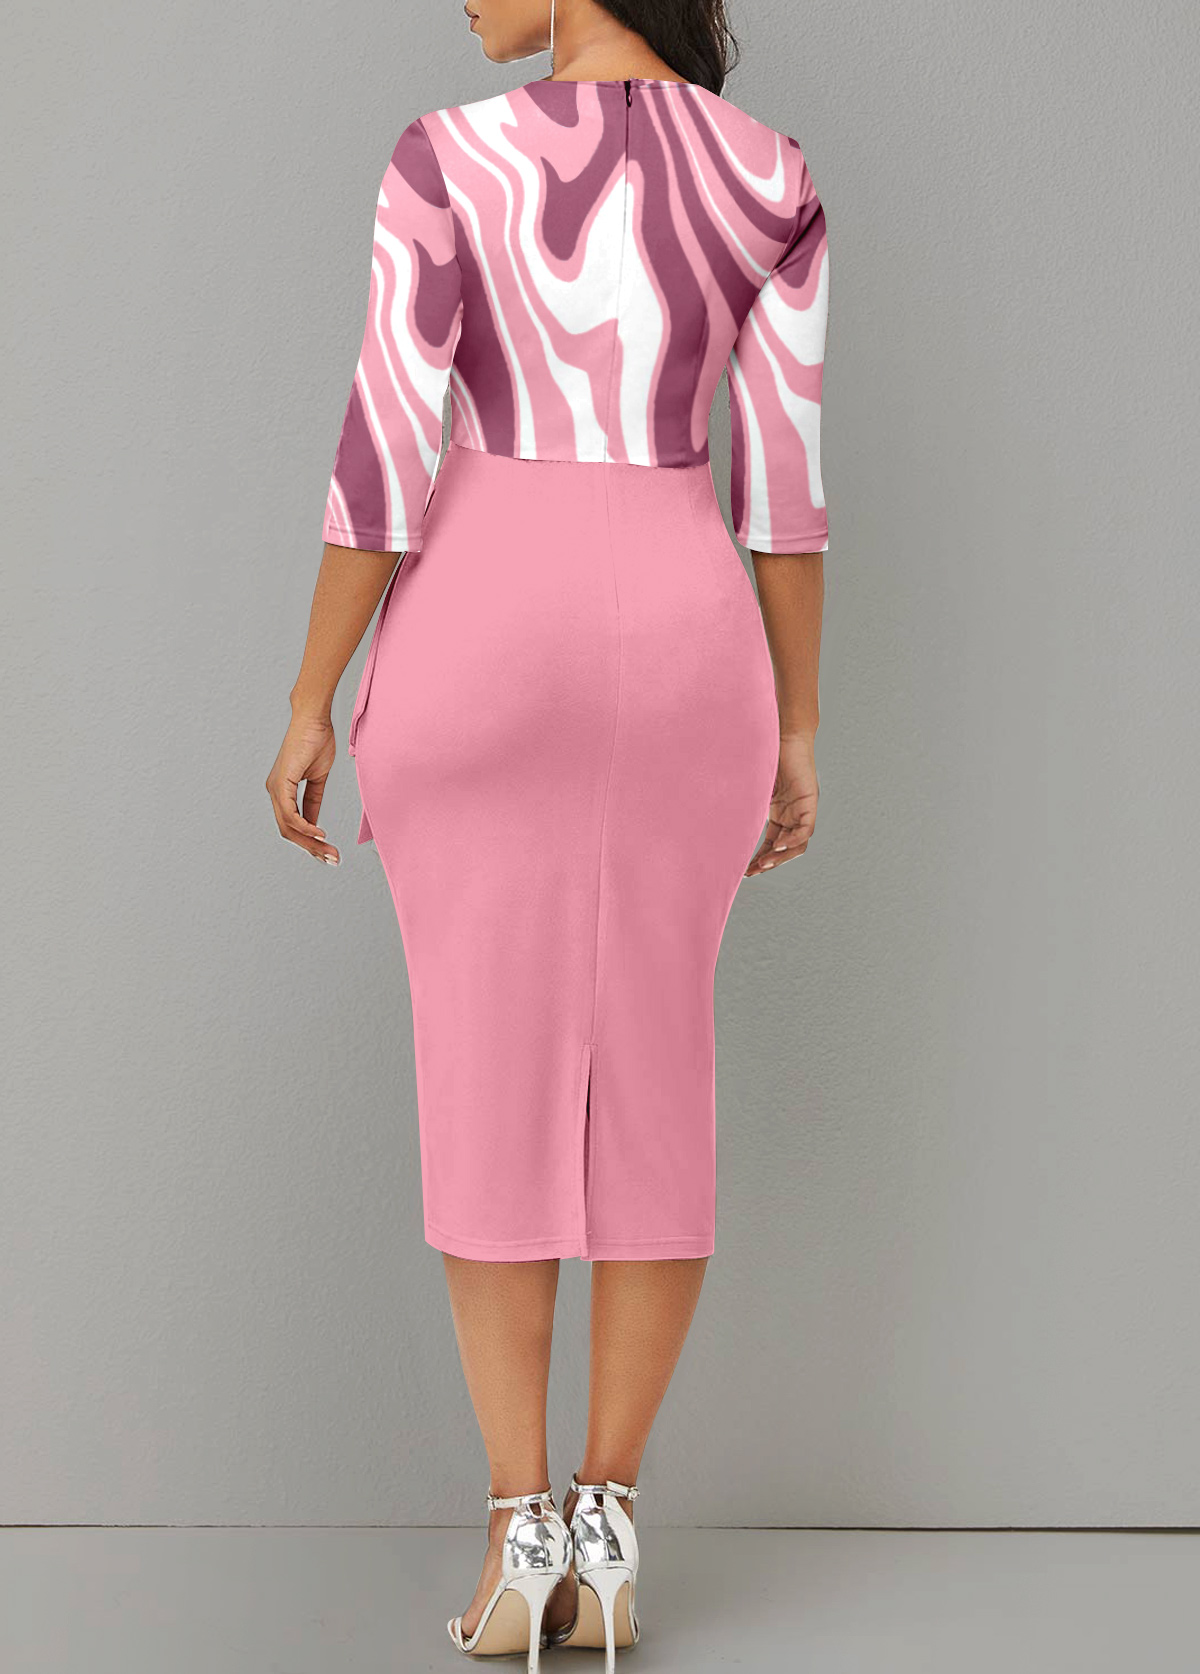 Geometric Print Asymmetry Light Pink 3/4 Sleeve Dress